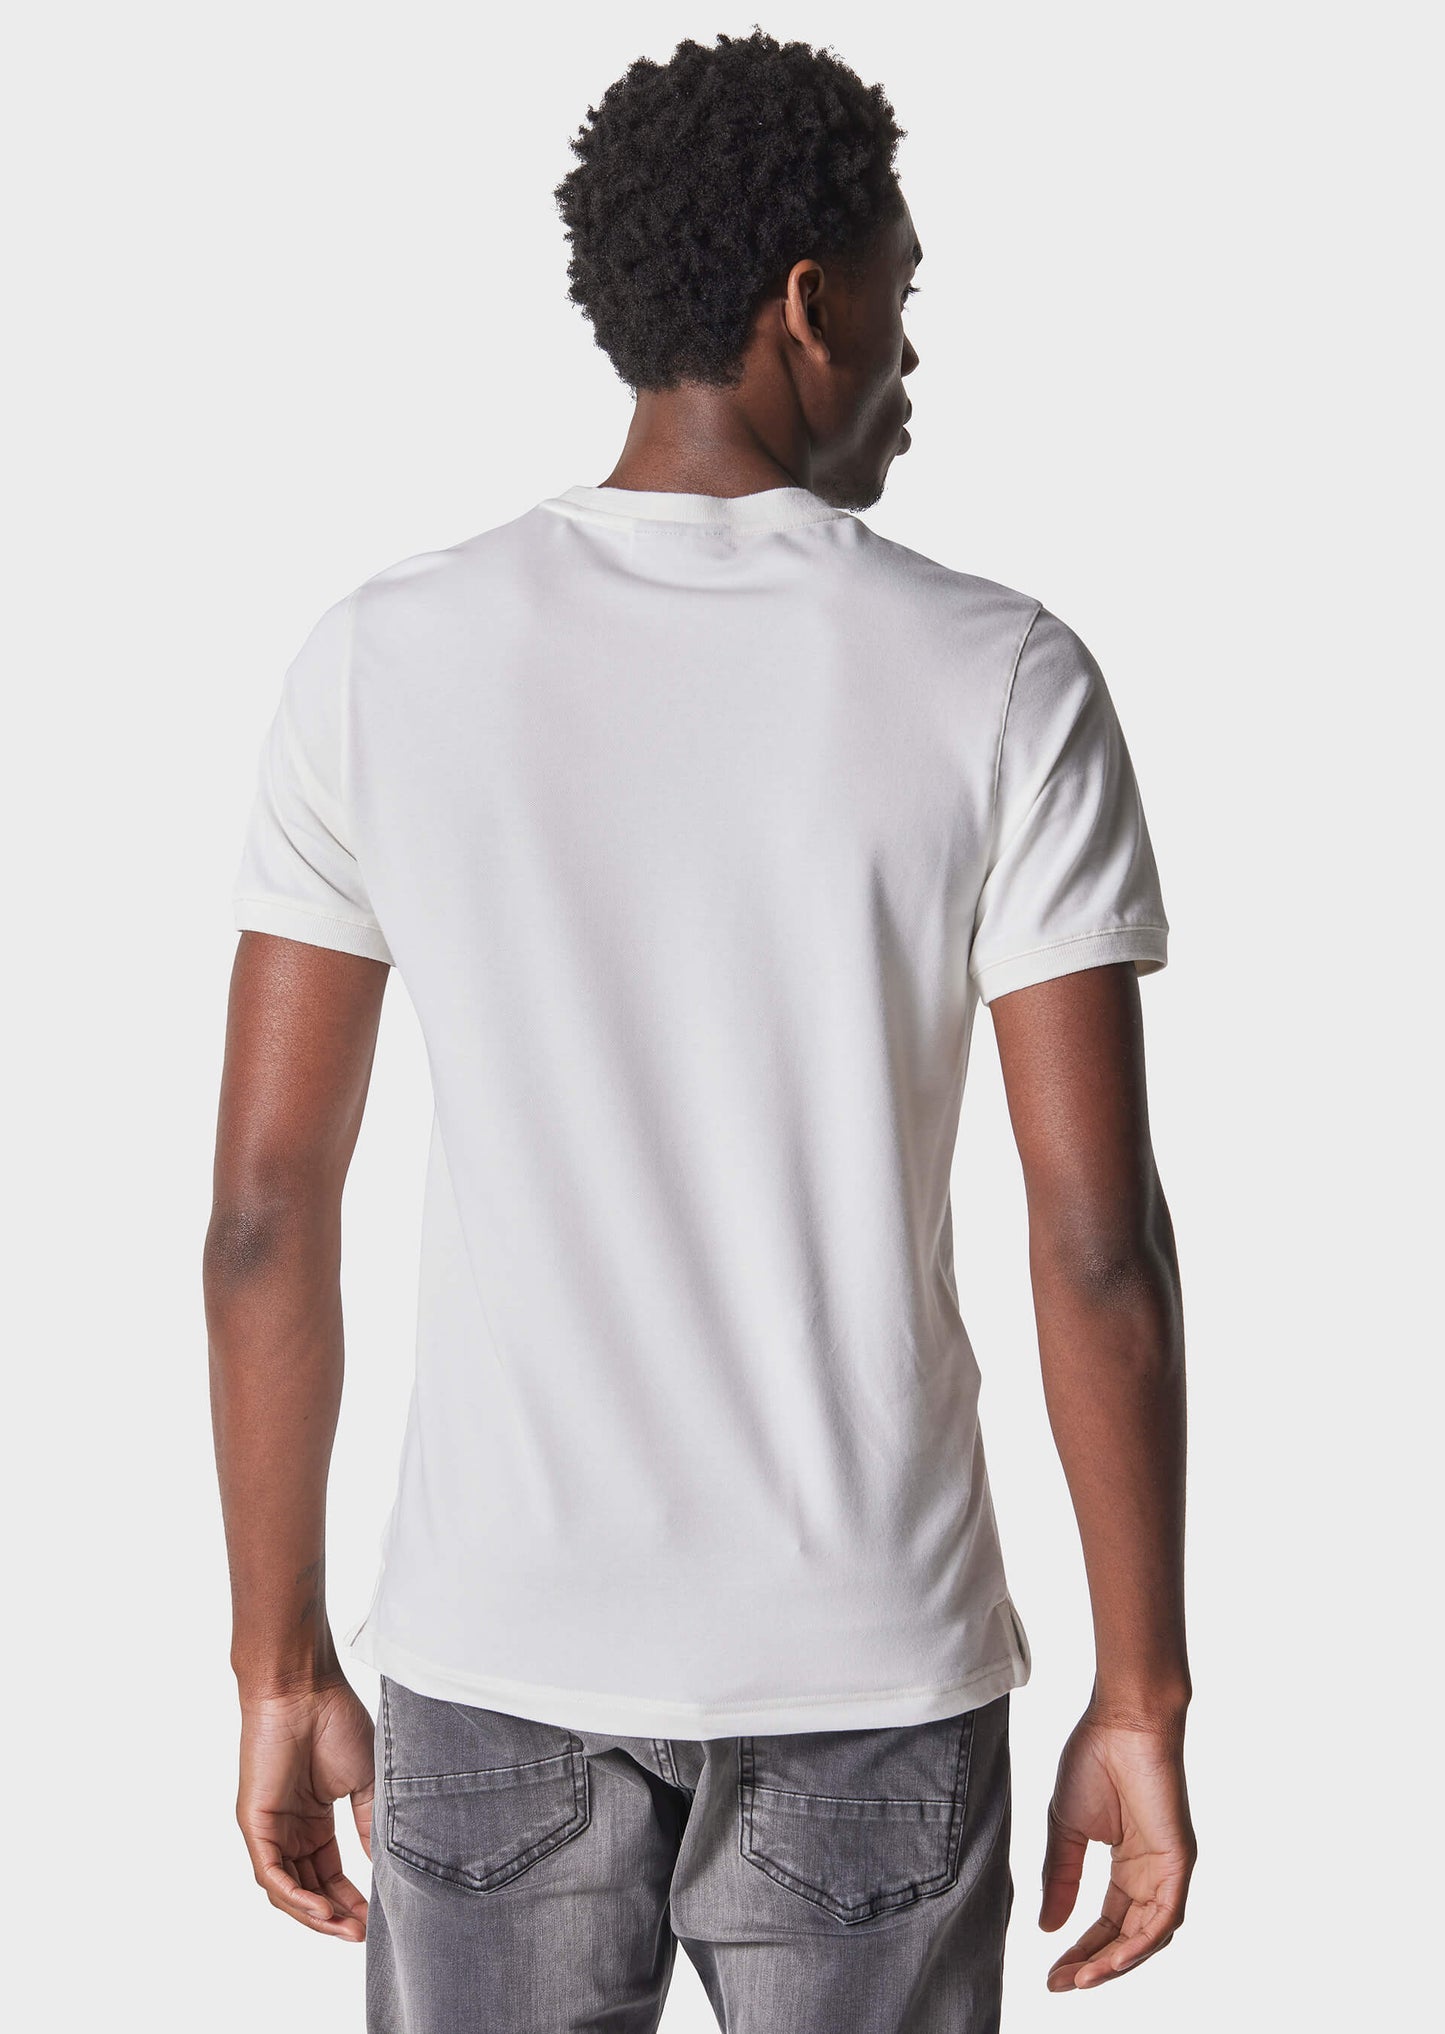 Perks Bone White T-Shirt